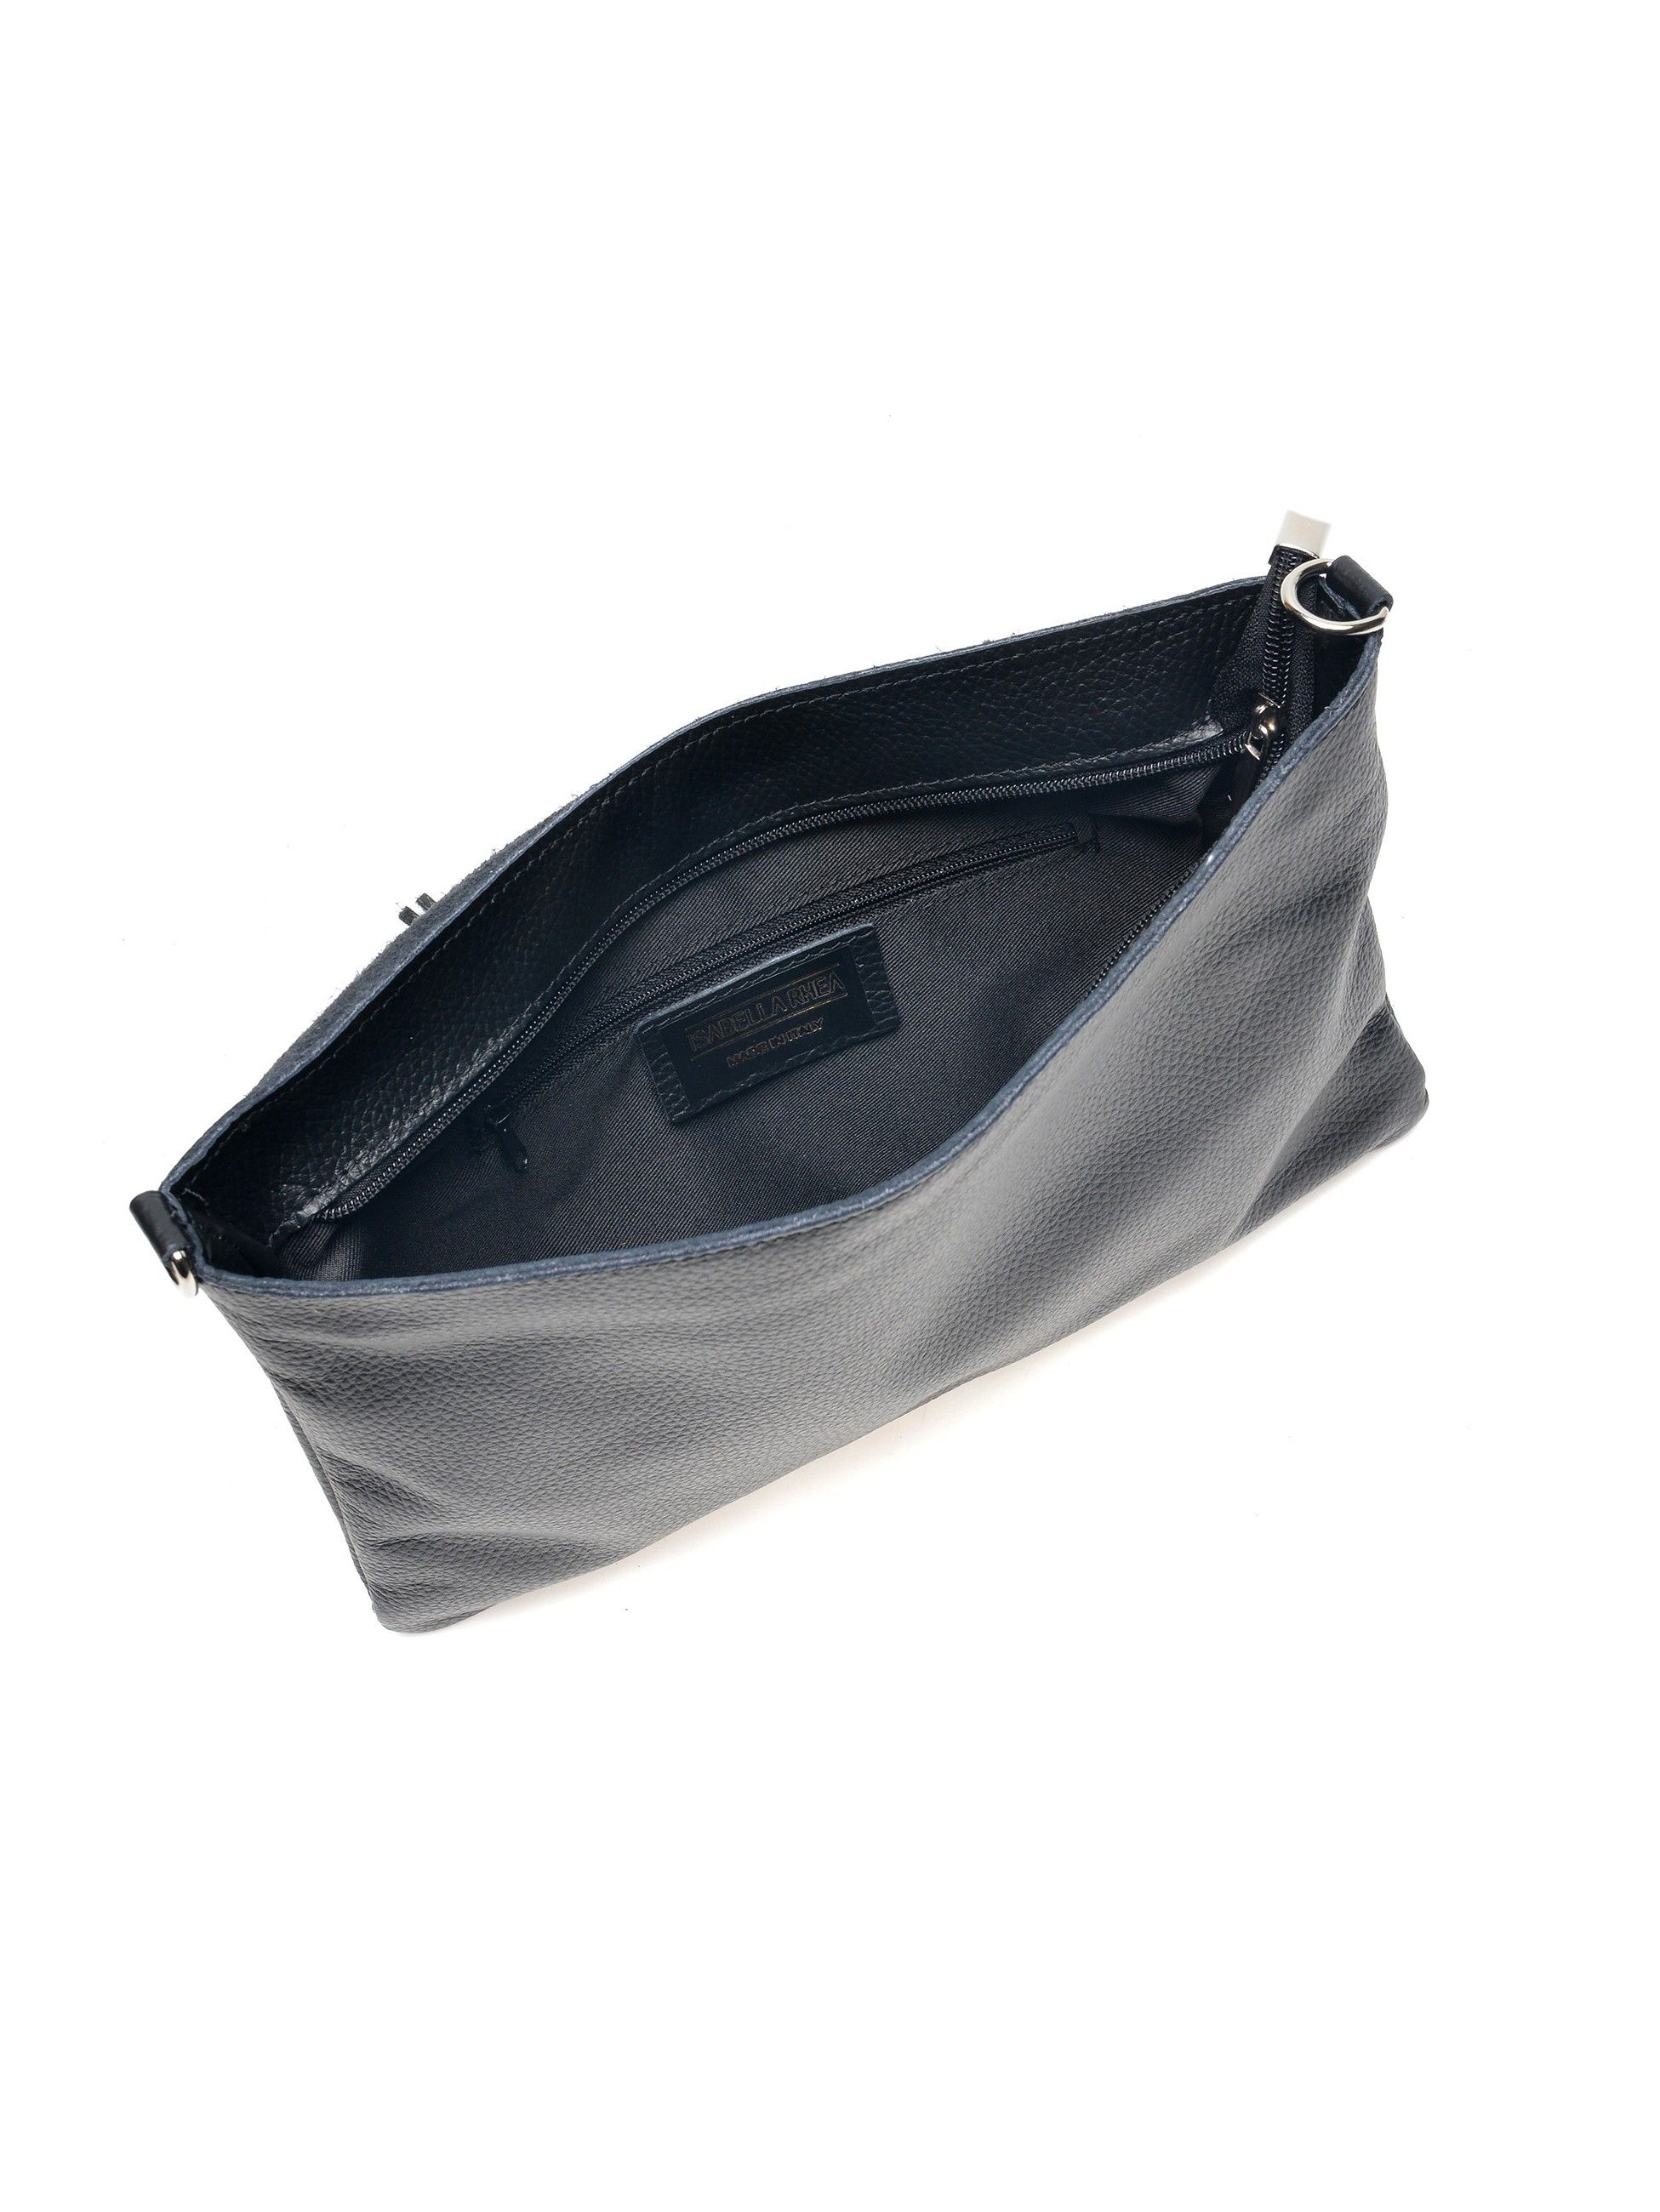 Shoulder Bag
100% cow leather
Top zip closure
Inner zip pocket
Tassel detail
Dimensions (L): 22x30 x / cm
Handle: /
Shoulder strap: 120 cm adjustable